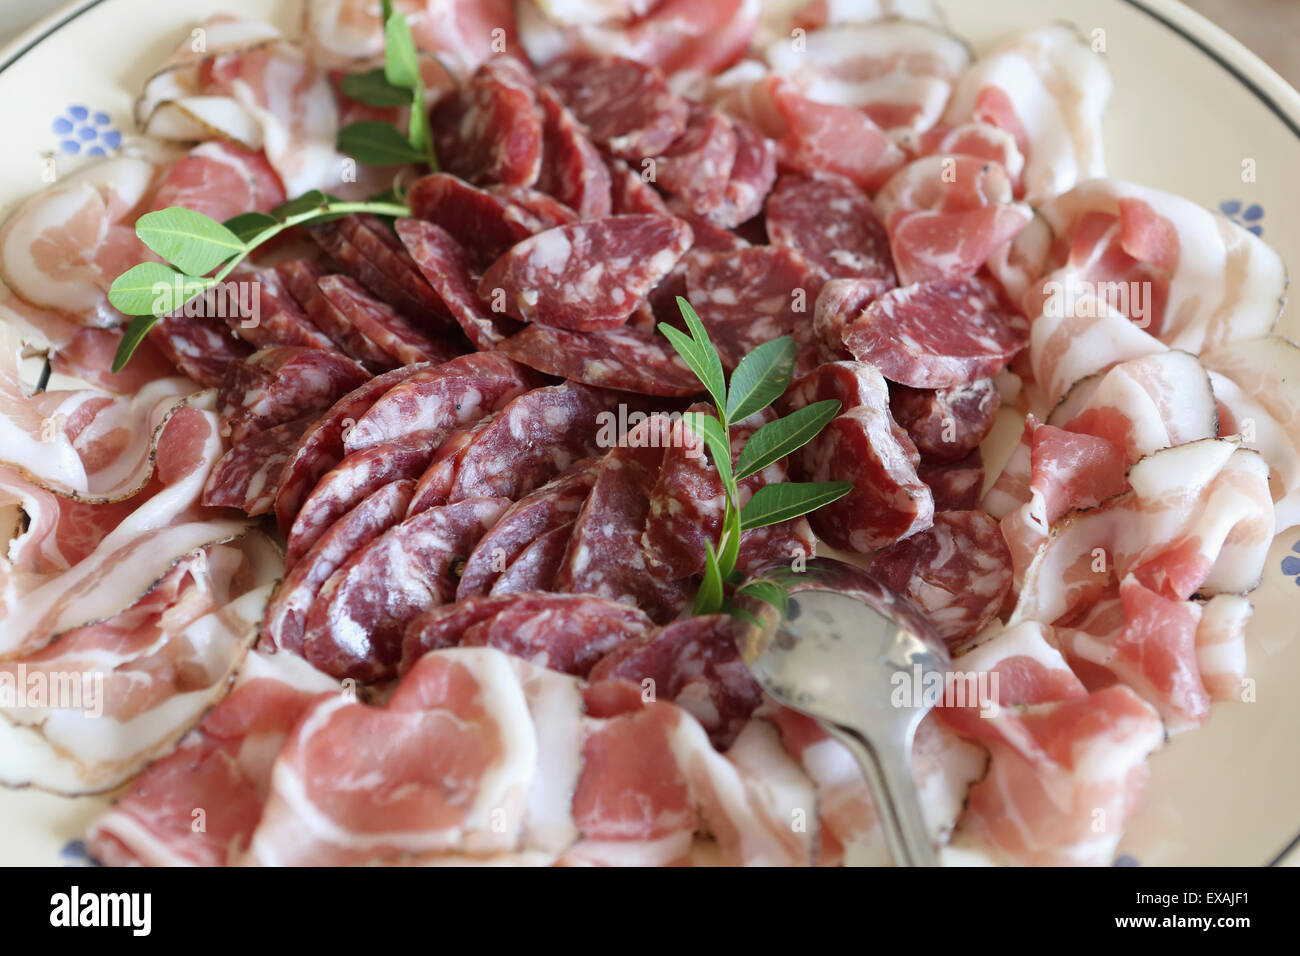 Regional Capocollo (capicola) ham surrounds salami produced in Martina Franca, Apulia, Italy, Europe Stock Photo